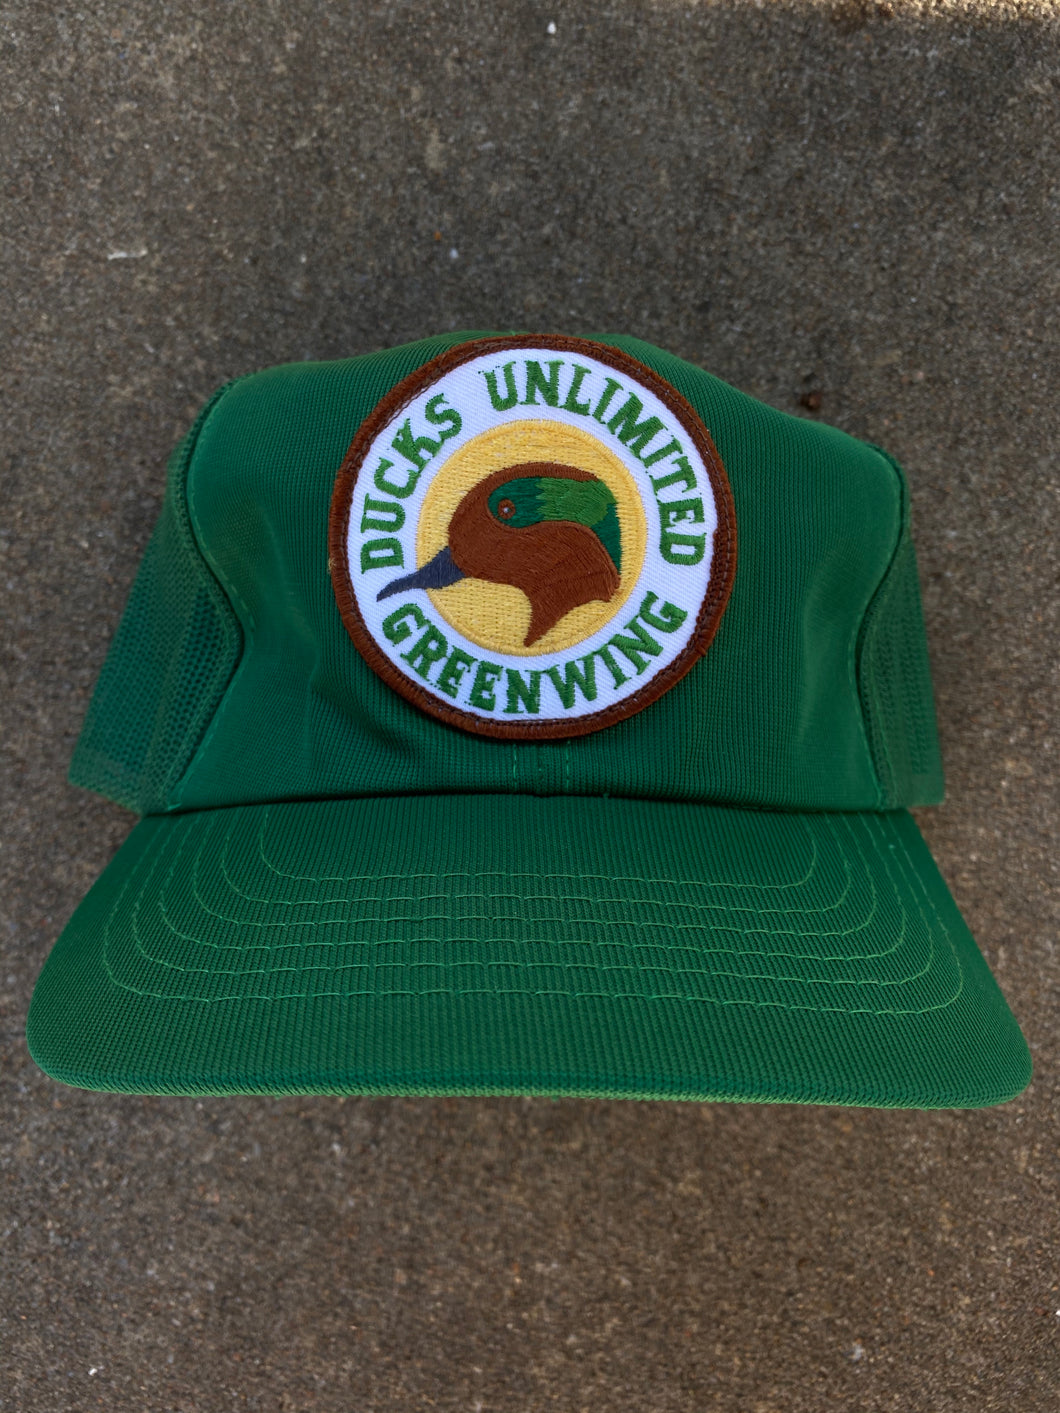 Ducks Unlimited Greenwing Snapback